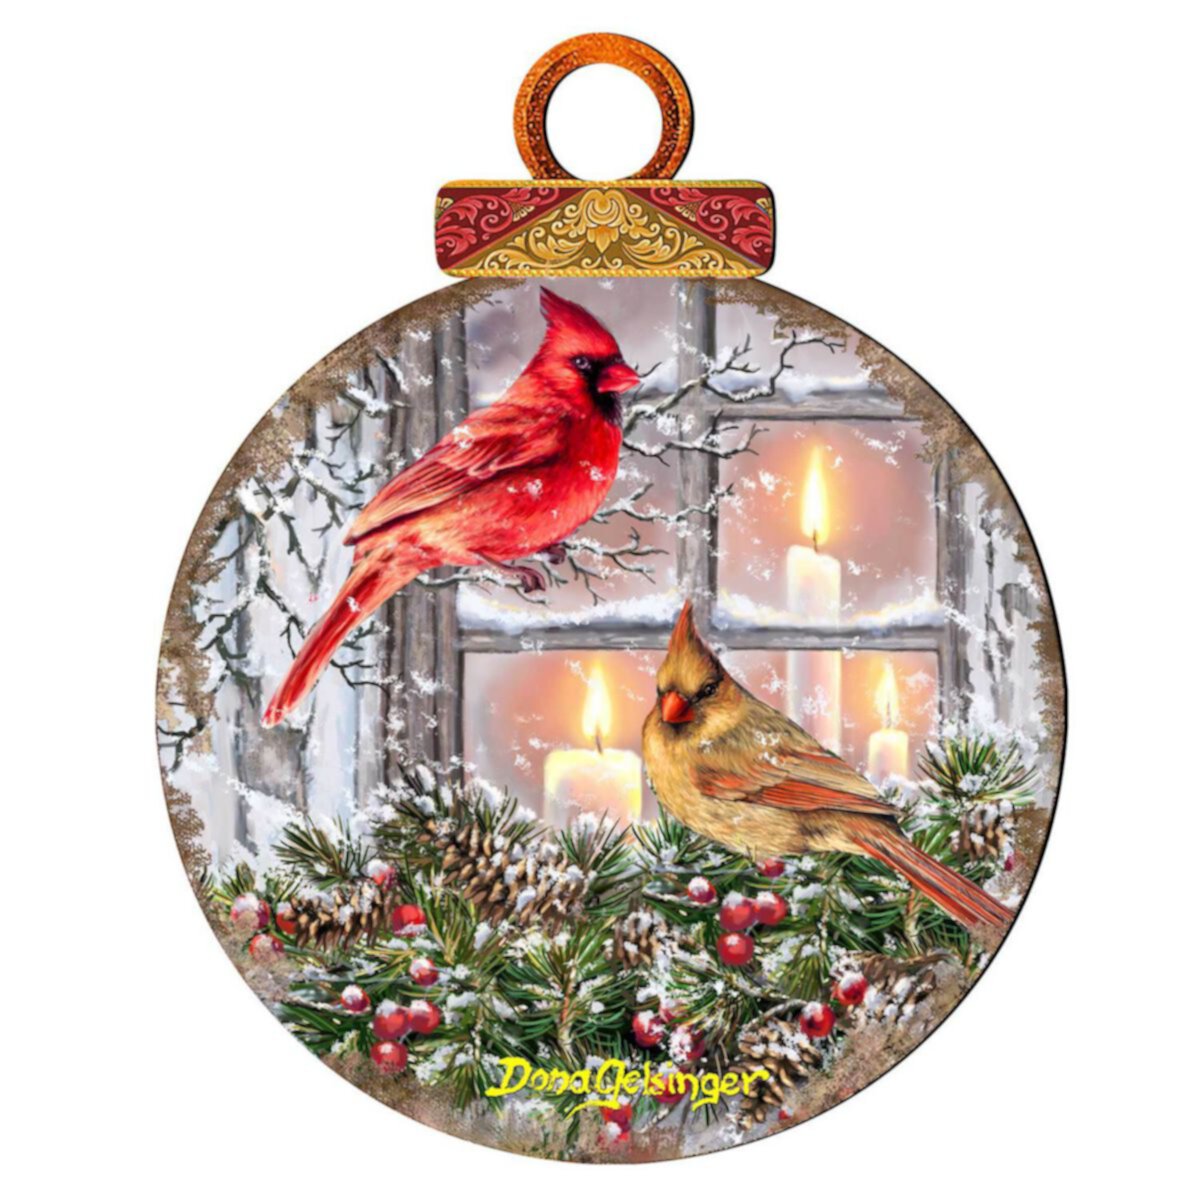 House Birds Holiday Door Decor by D. Gelsinger - Christmas Decor Designocracy